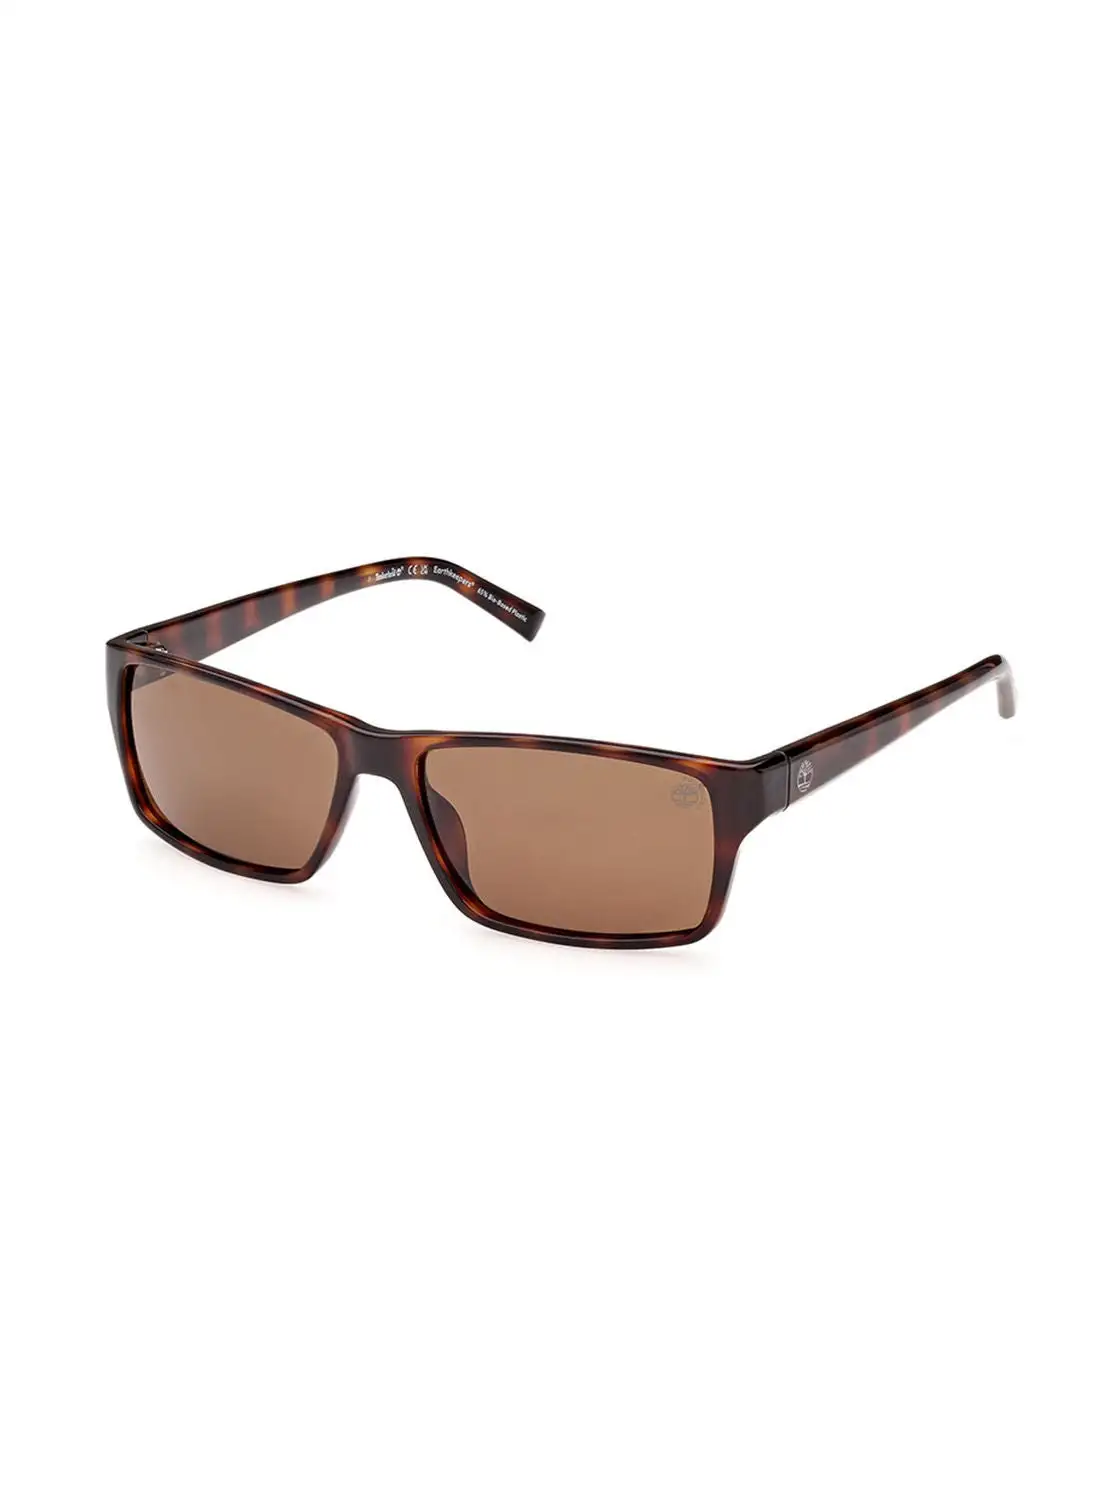 Timberland Sunglasses For Men TB929752H58